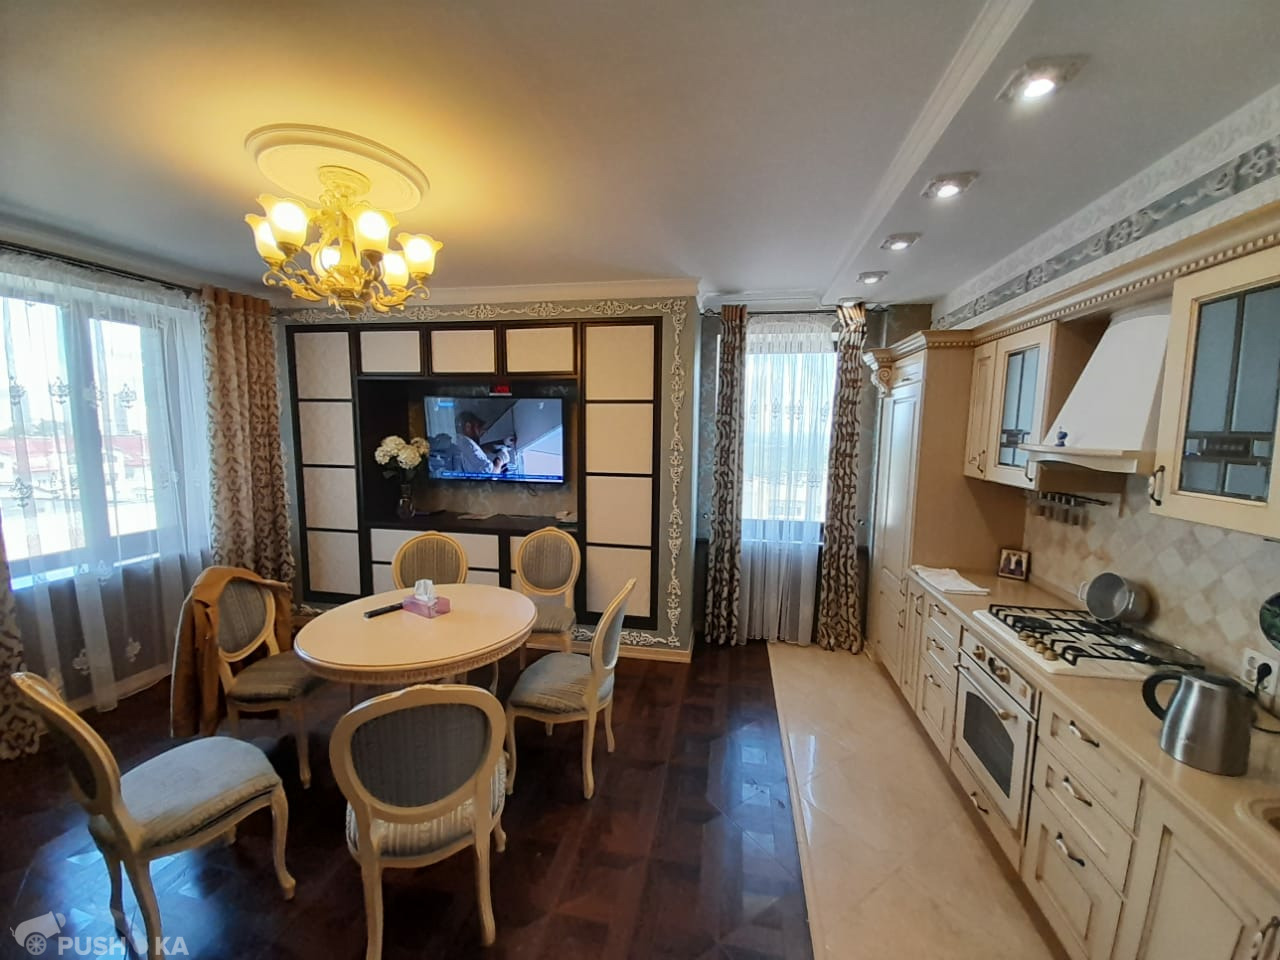 Продаётся 2-комнатная квартира 64.5 кв.м. этаж 8/9 за 7 000 000 руб 